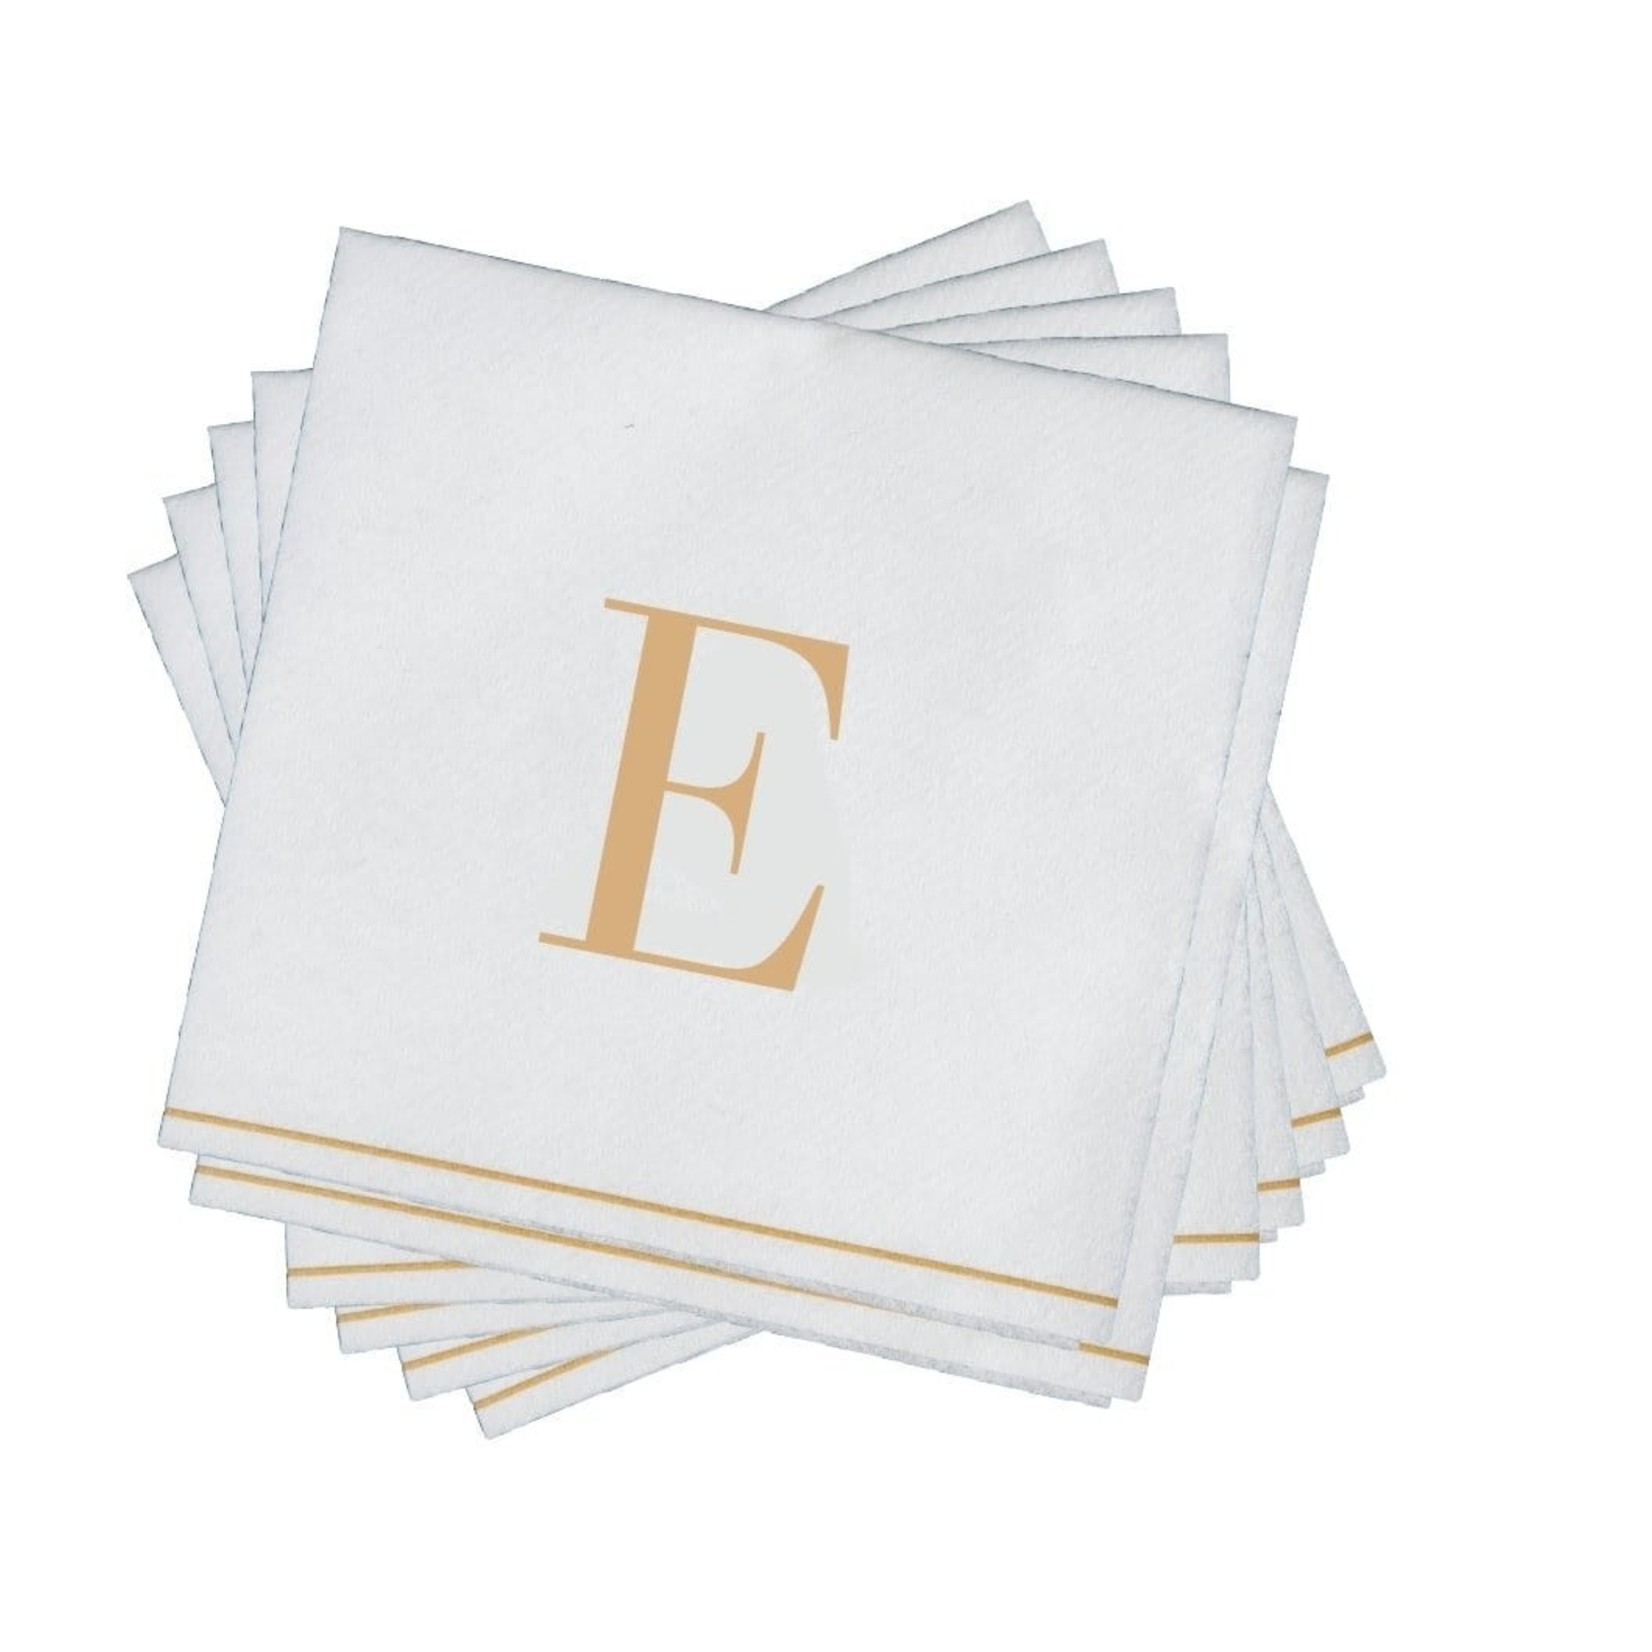 16 PK White and Gold Cocktail Paper Napkins  - Letter E